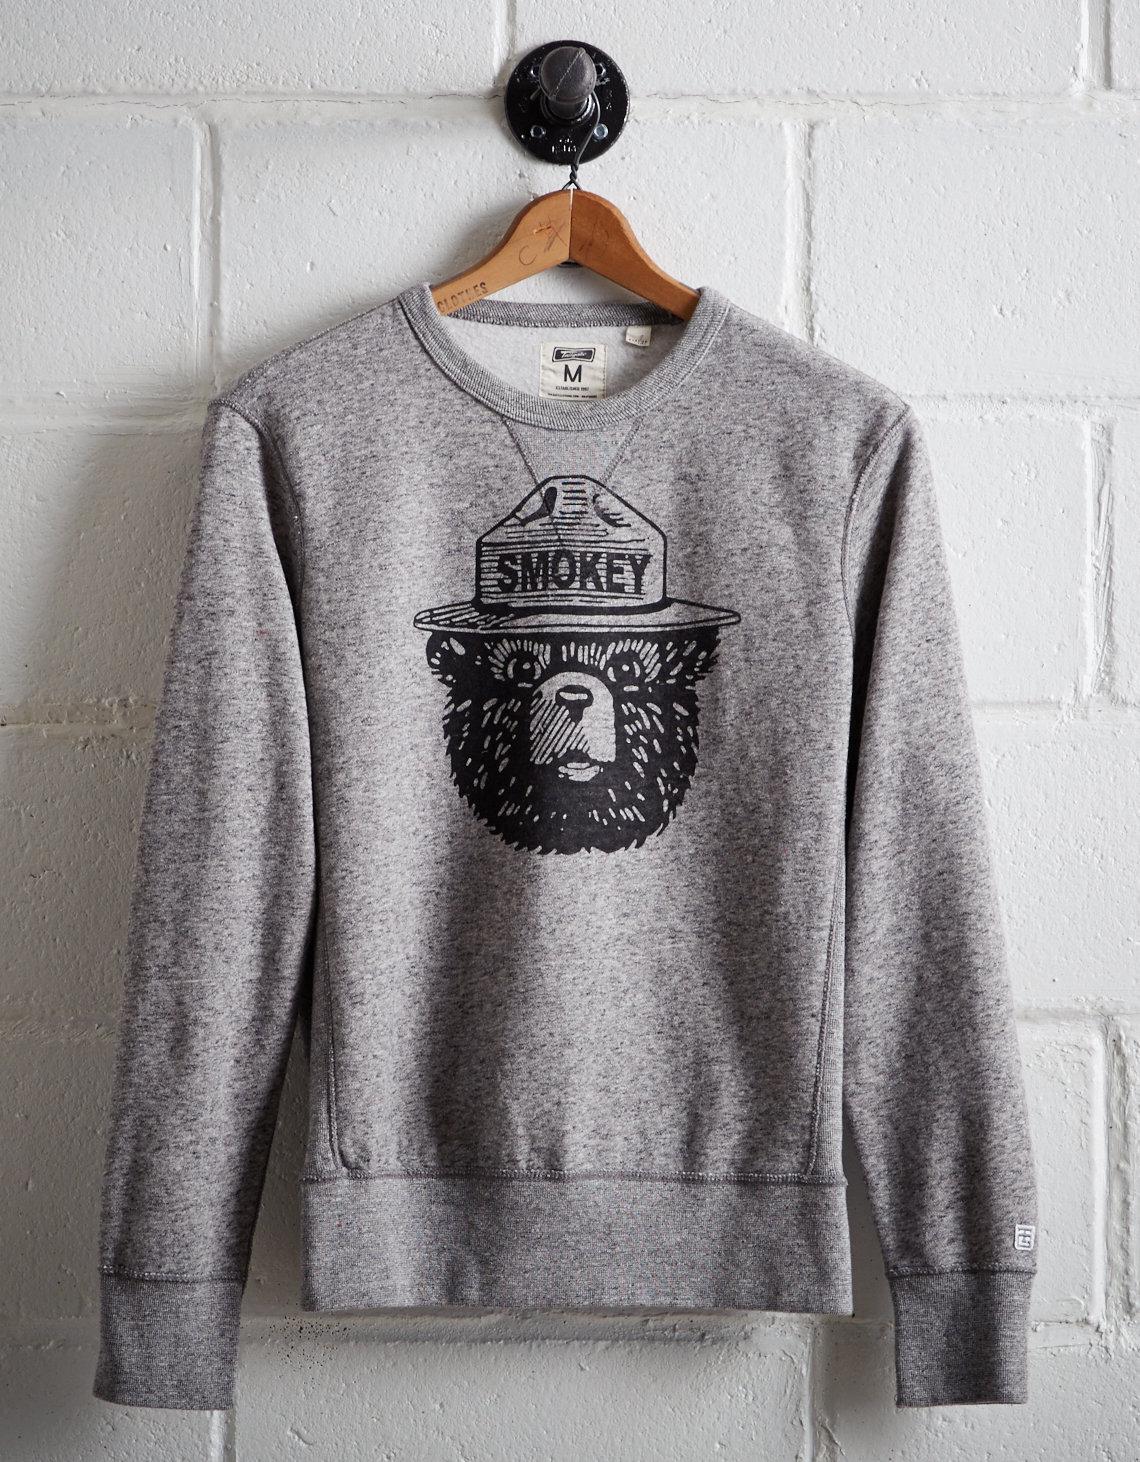 Download Tailgate Cotton Men's Smokey The Bear Sweatshirt in Gray ...